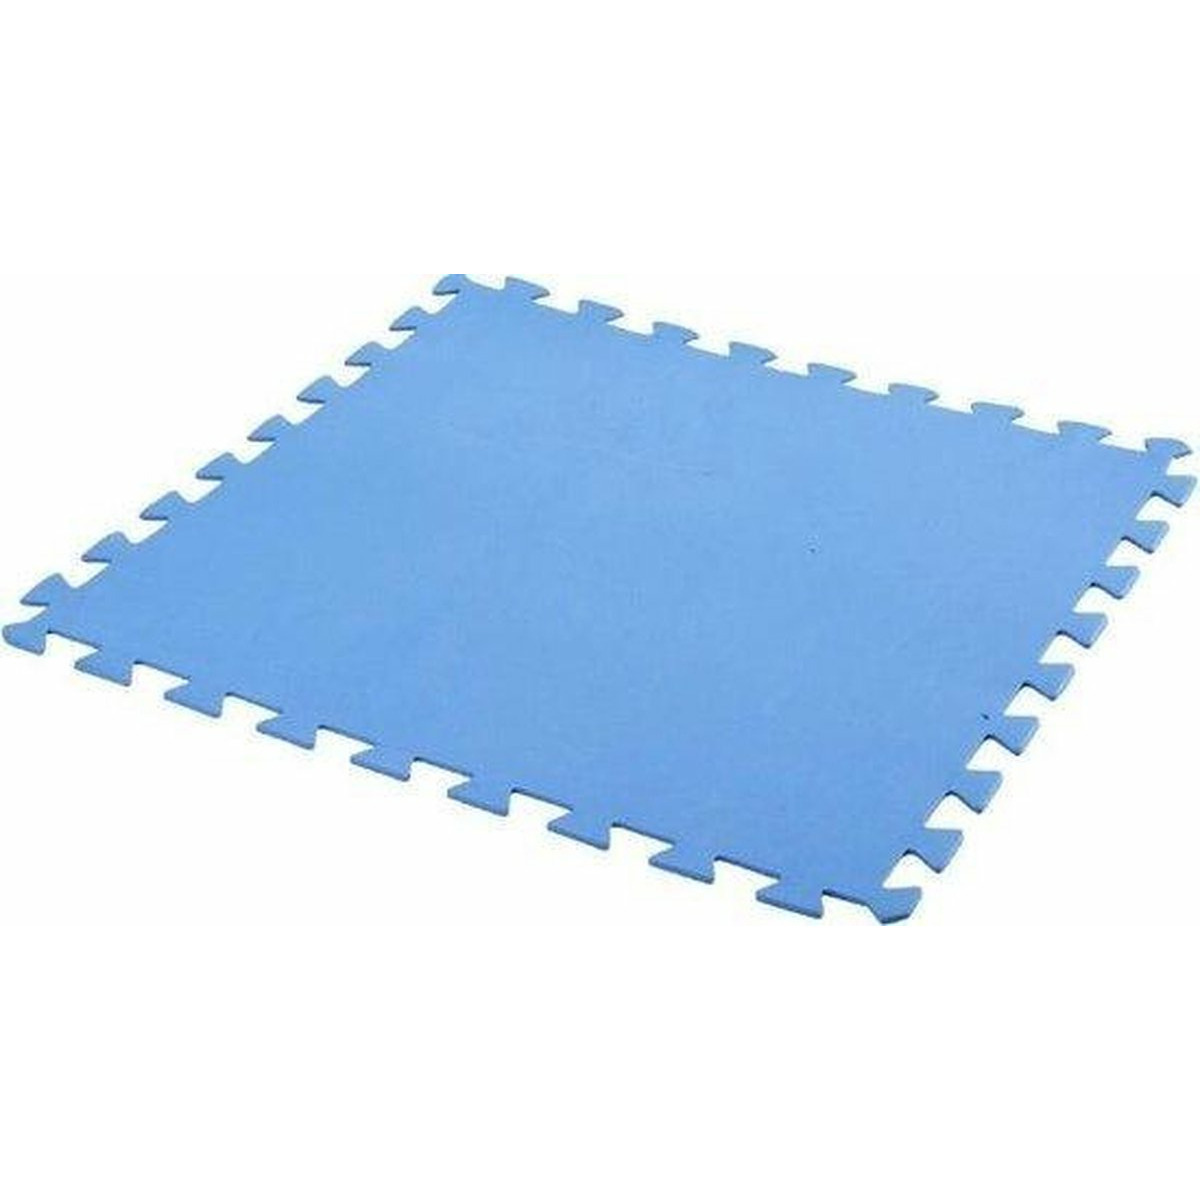 9x stuks Foam puzzelmat zwembadtegels-fitnesstegels blauw 50 x 50 cm